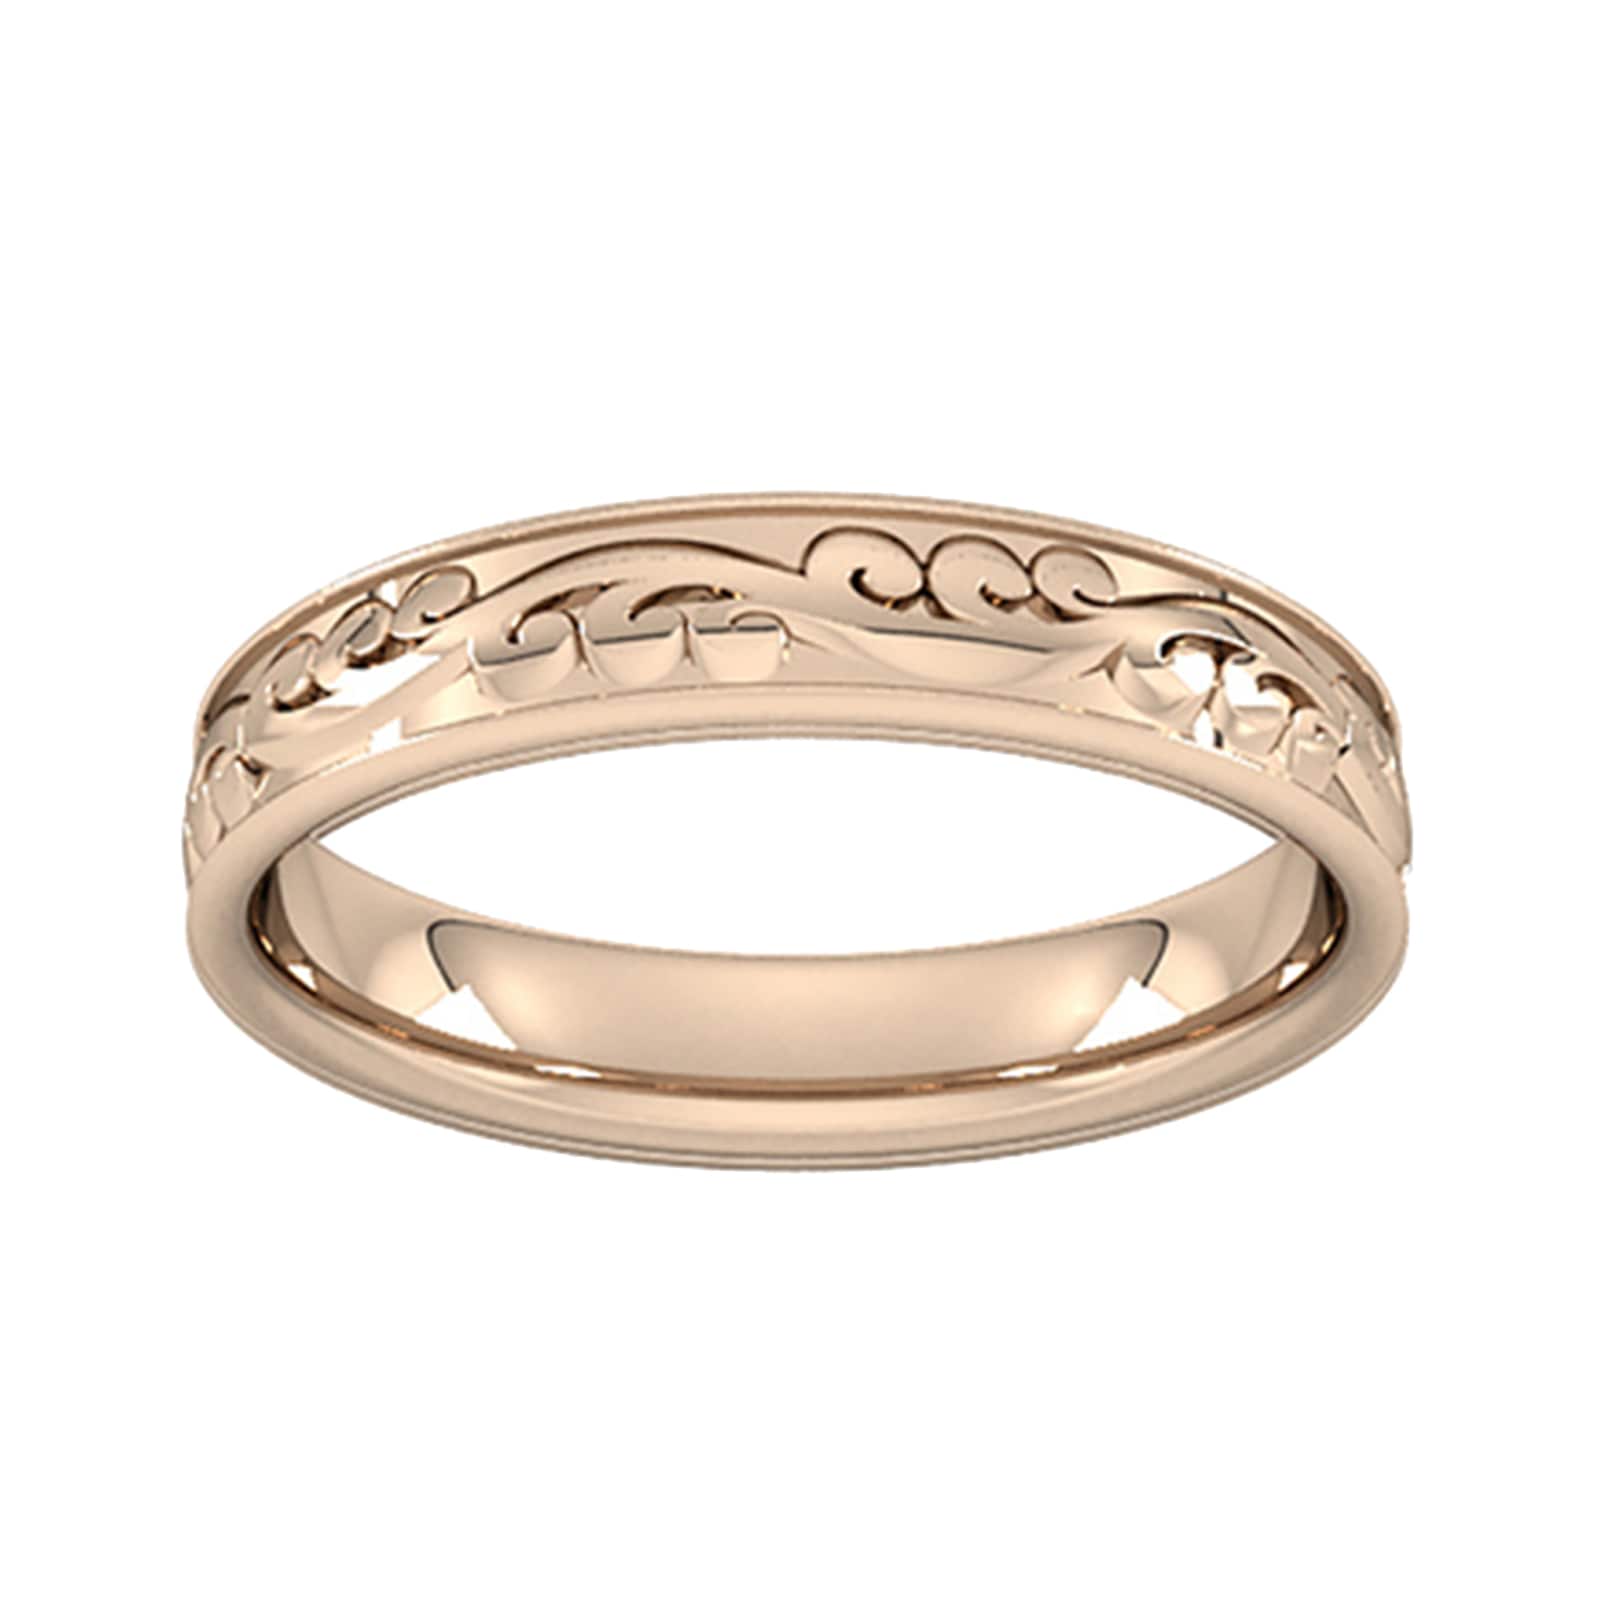 4mm Hand Engraved Wedding Ring In 9 Carat Rose Gold - Ring Size V